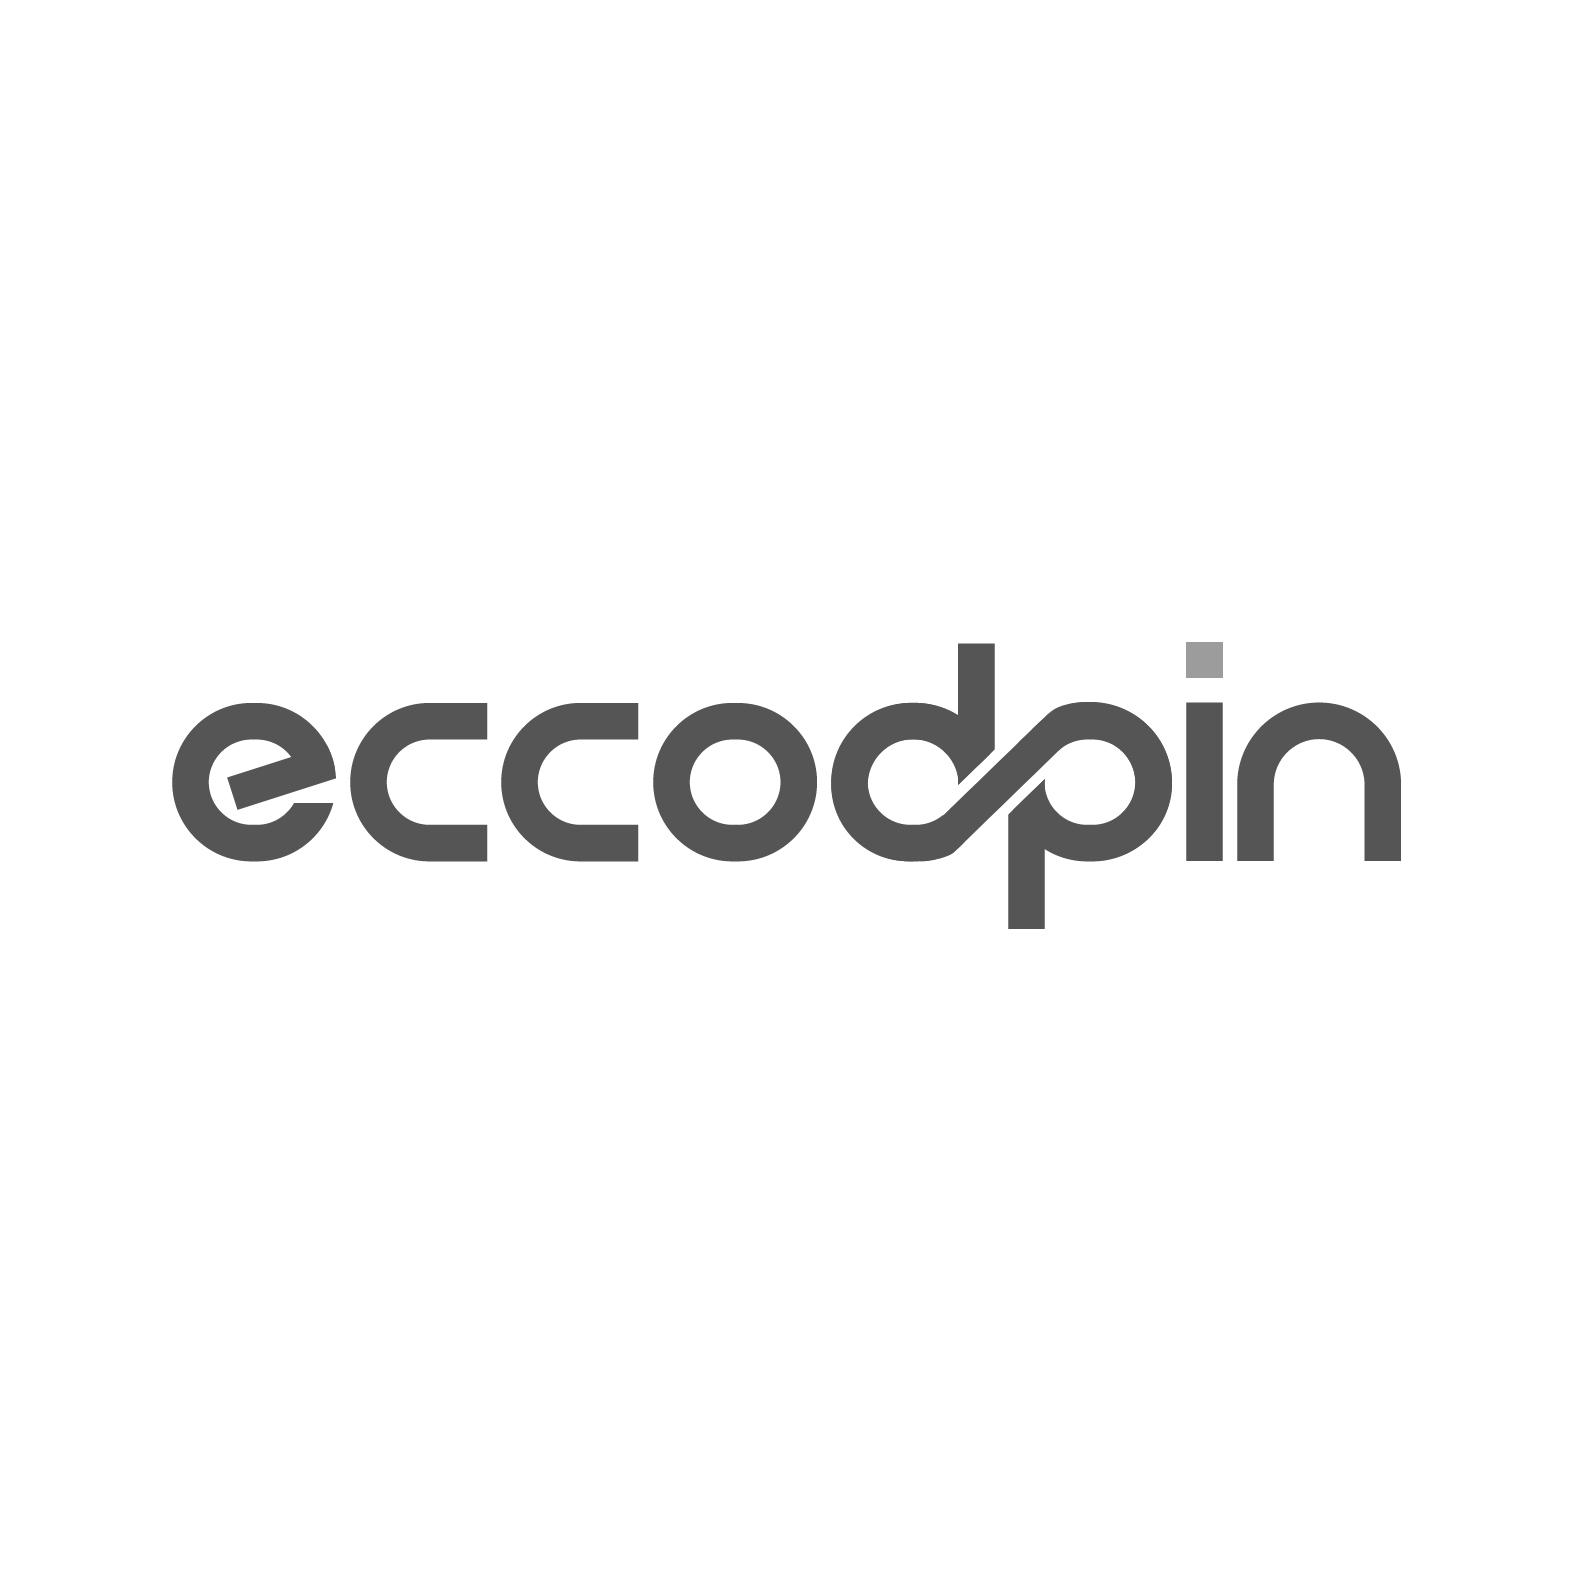 11类-电器灯具ECCODPIN商标转让